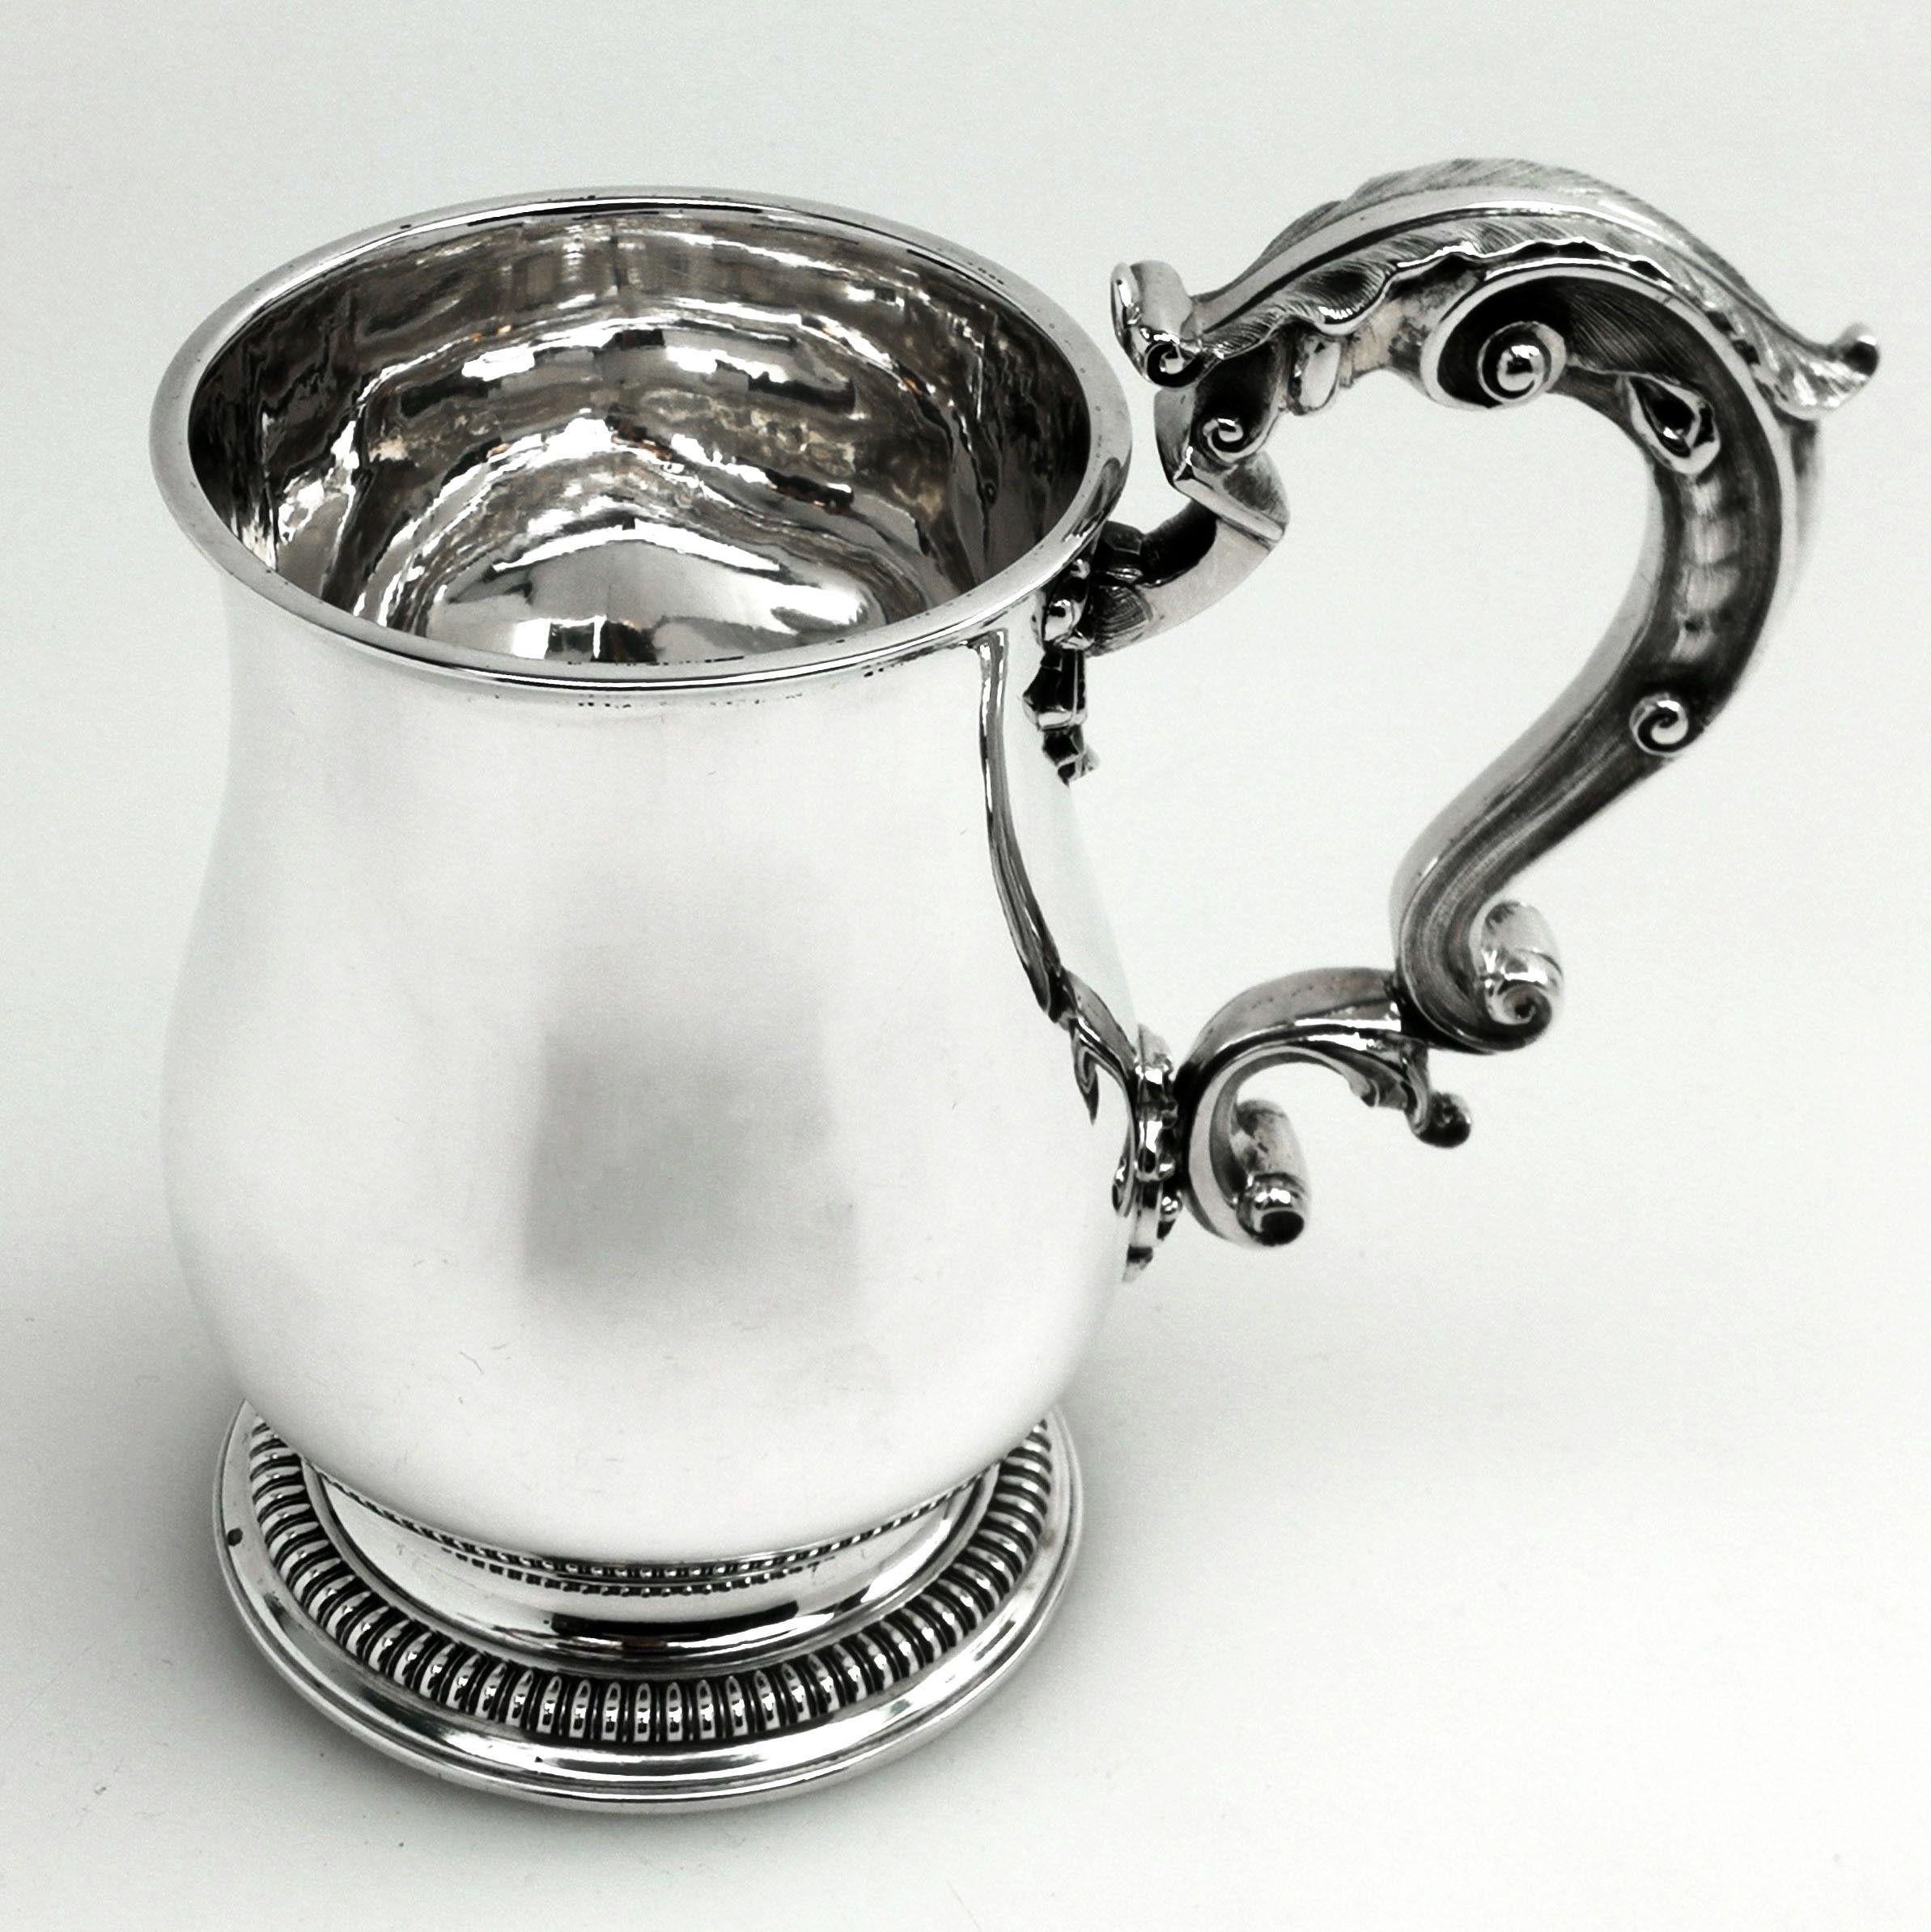 English Antique William IV Sterling Silver Mug / Beer Mug / Pint Mug 1835